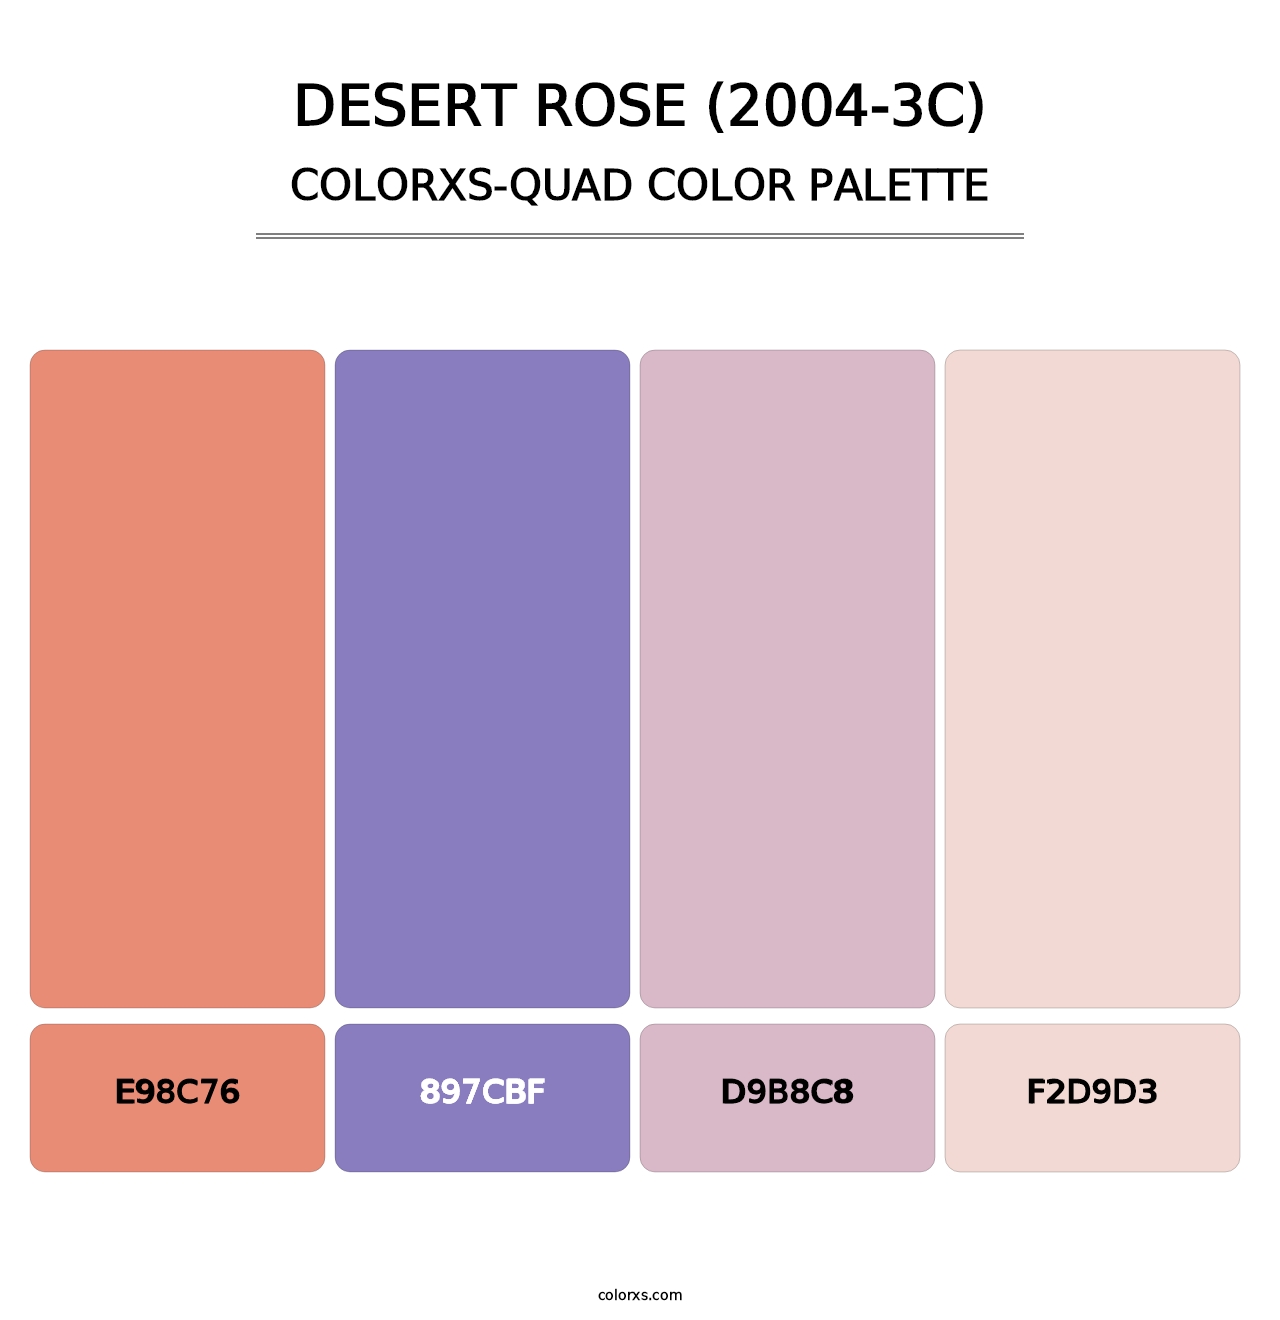 Desert Rose (2004-3C) - Colorxs Quad Palette